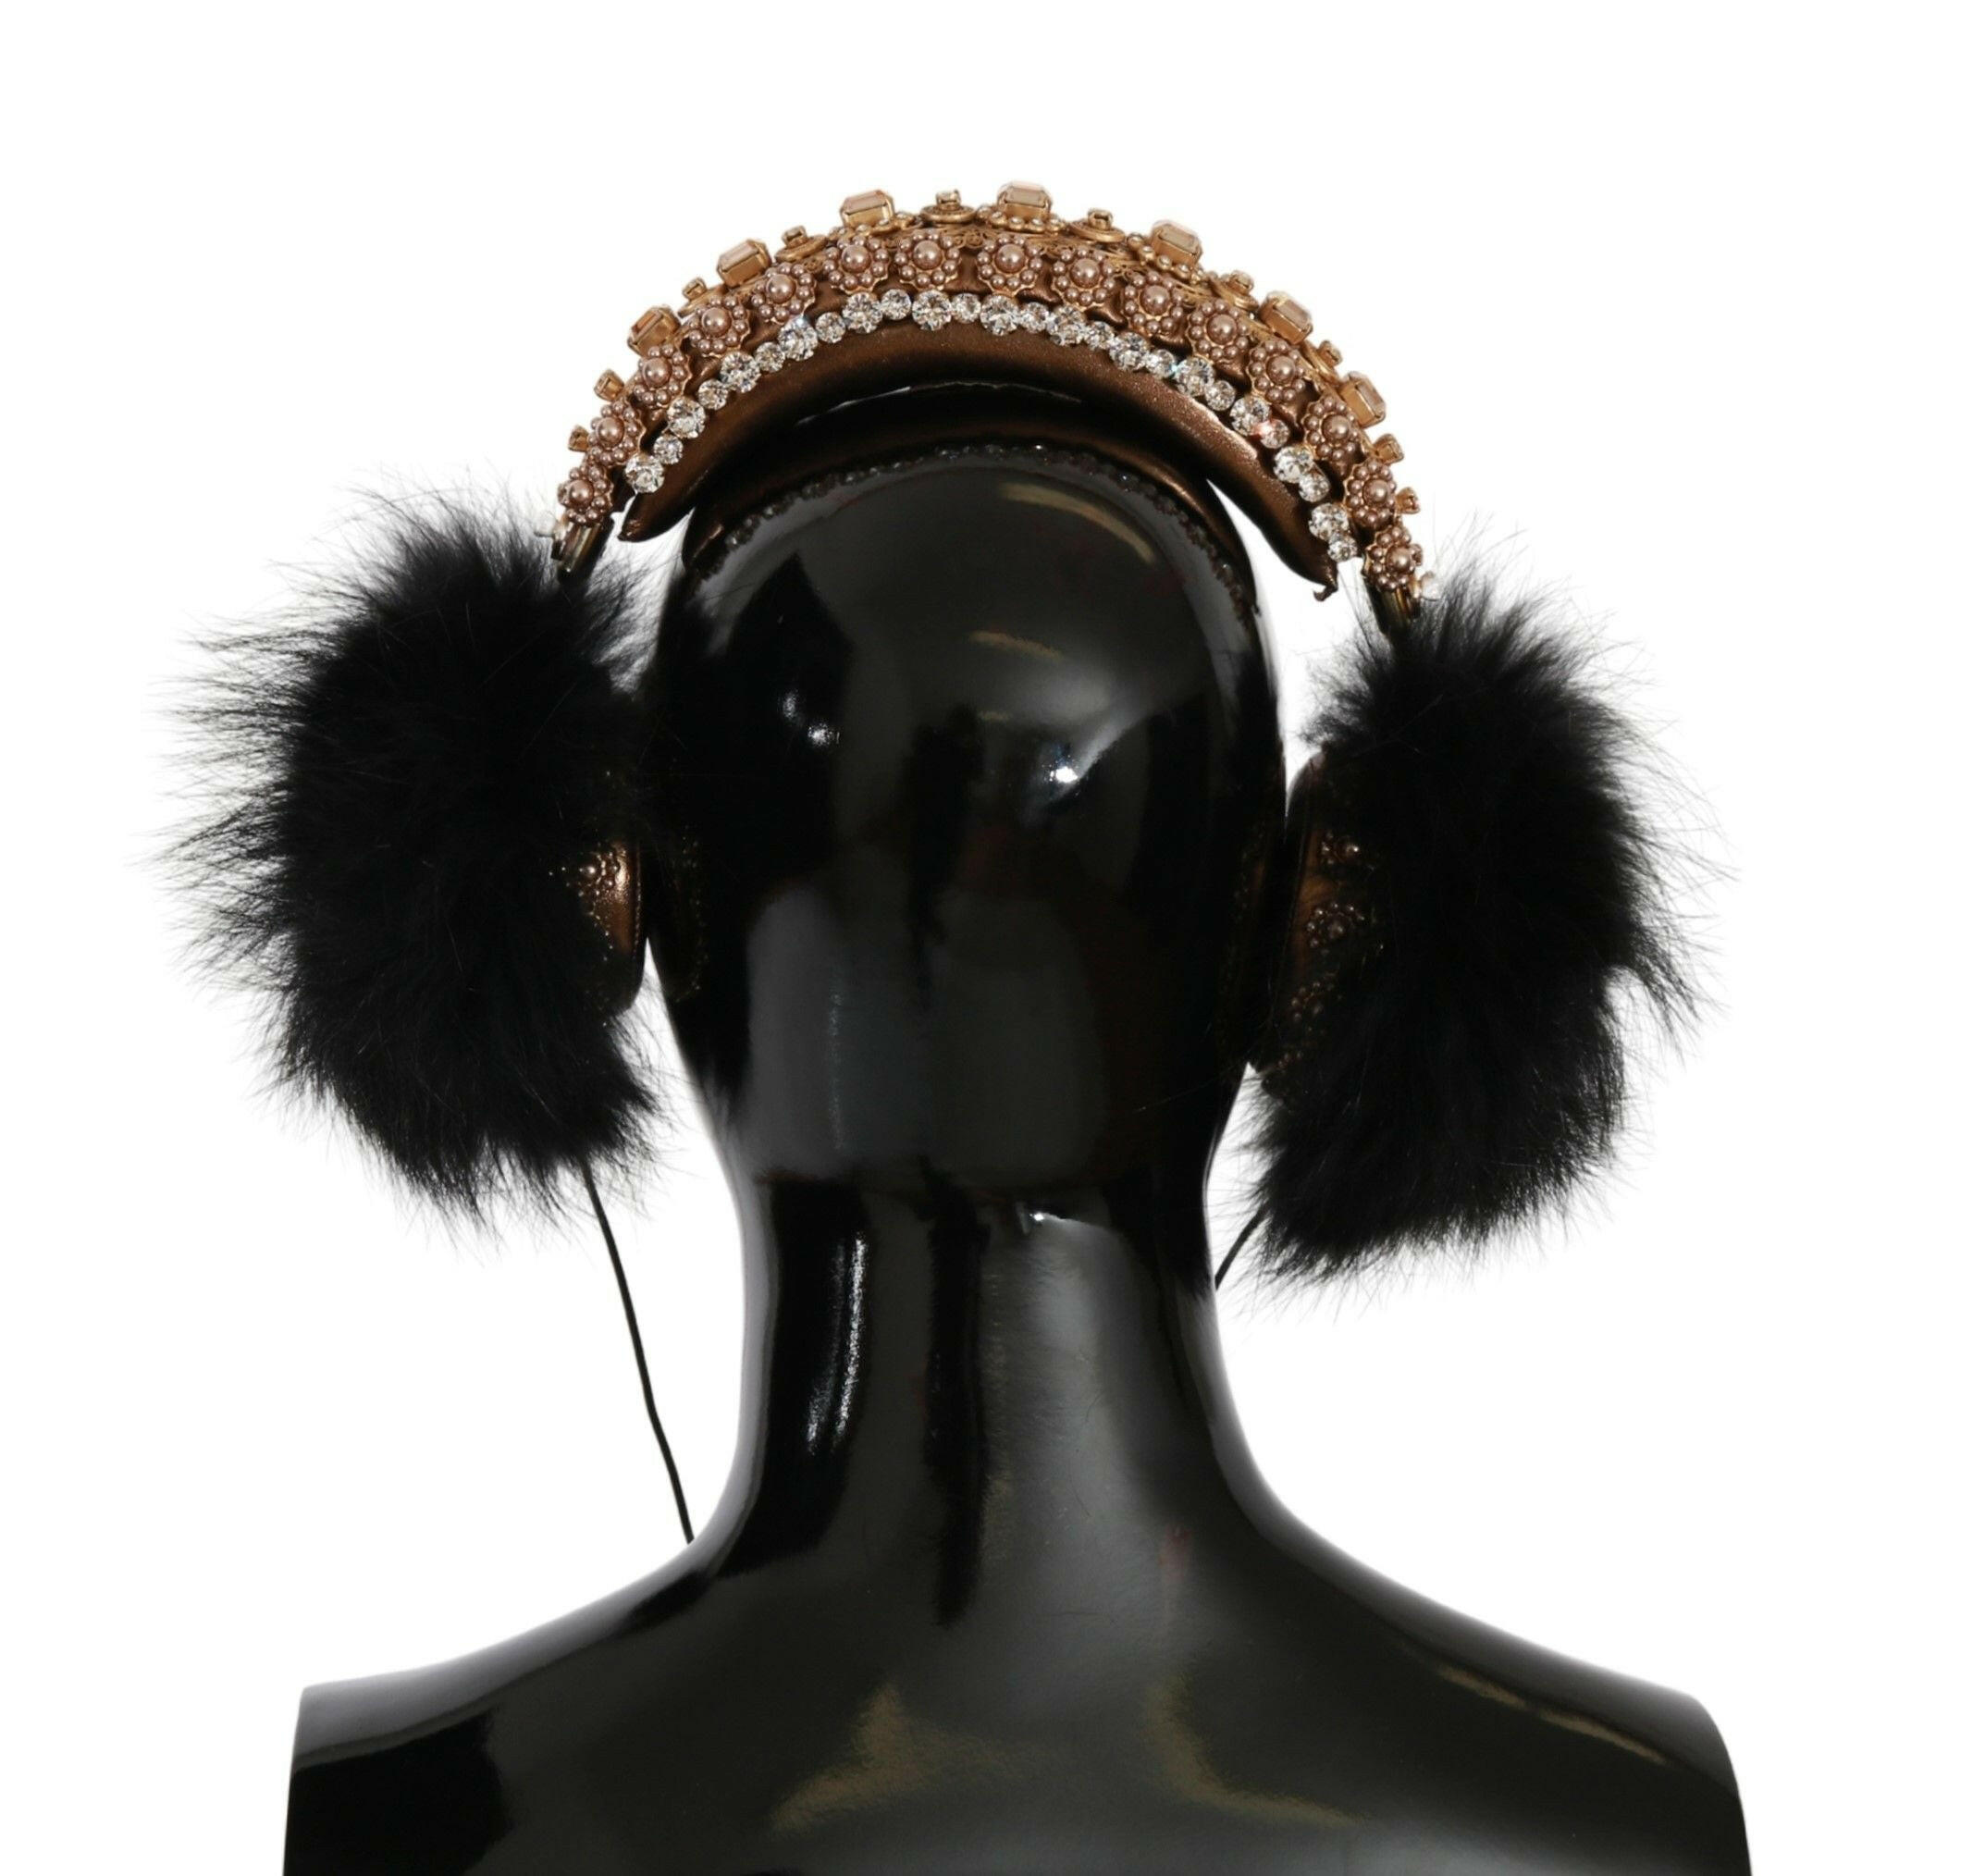 Dolce & Gabbana Gold Black Crystal Fur Headset Audio Headphones - GENUINE AUTHENTIC BRAND LLC  